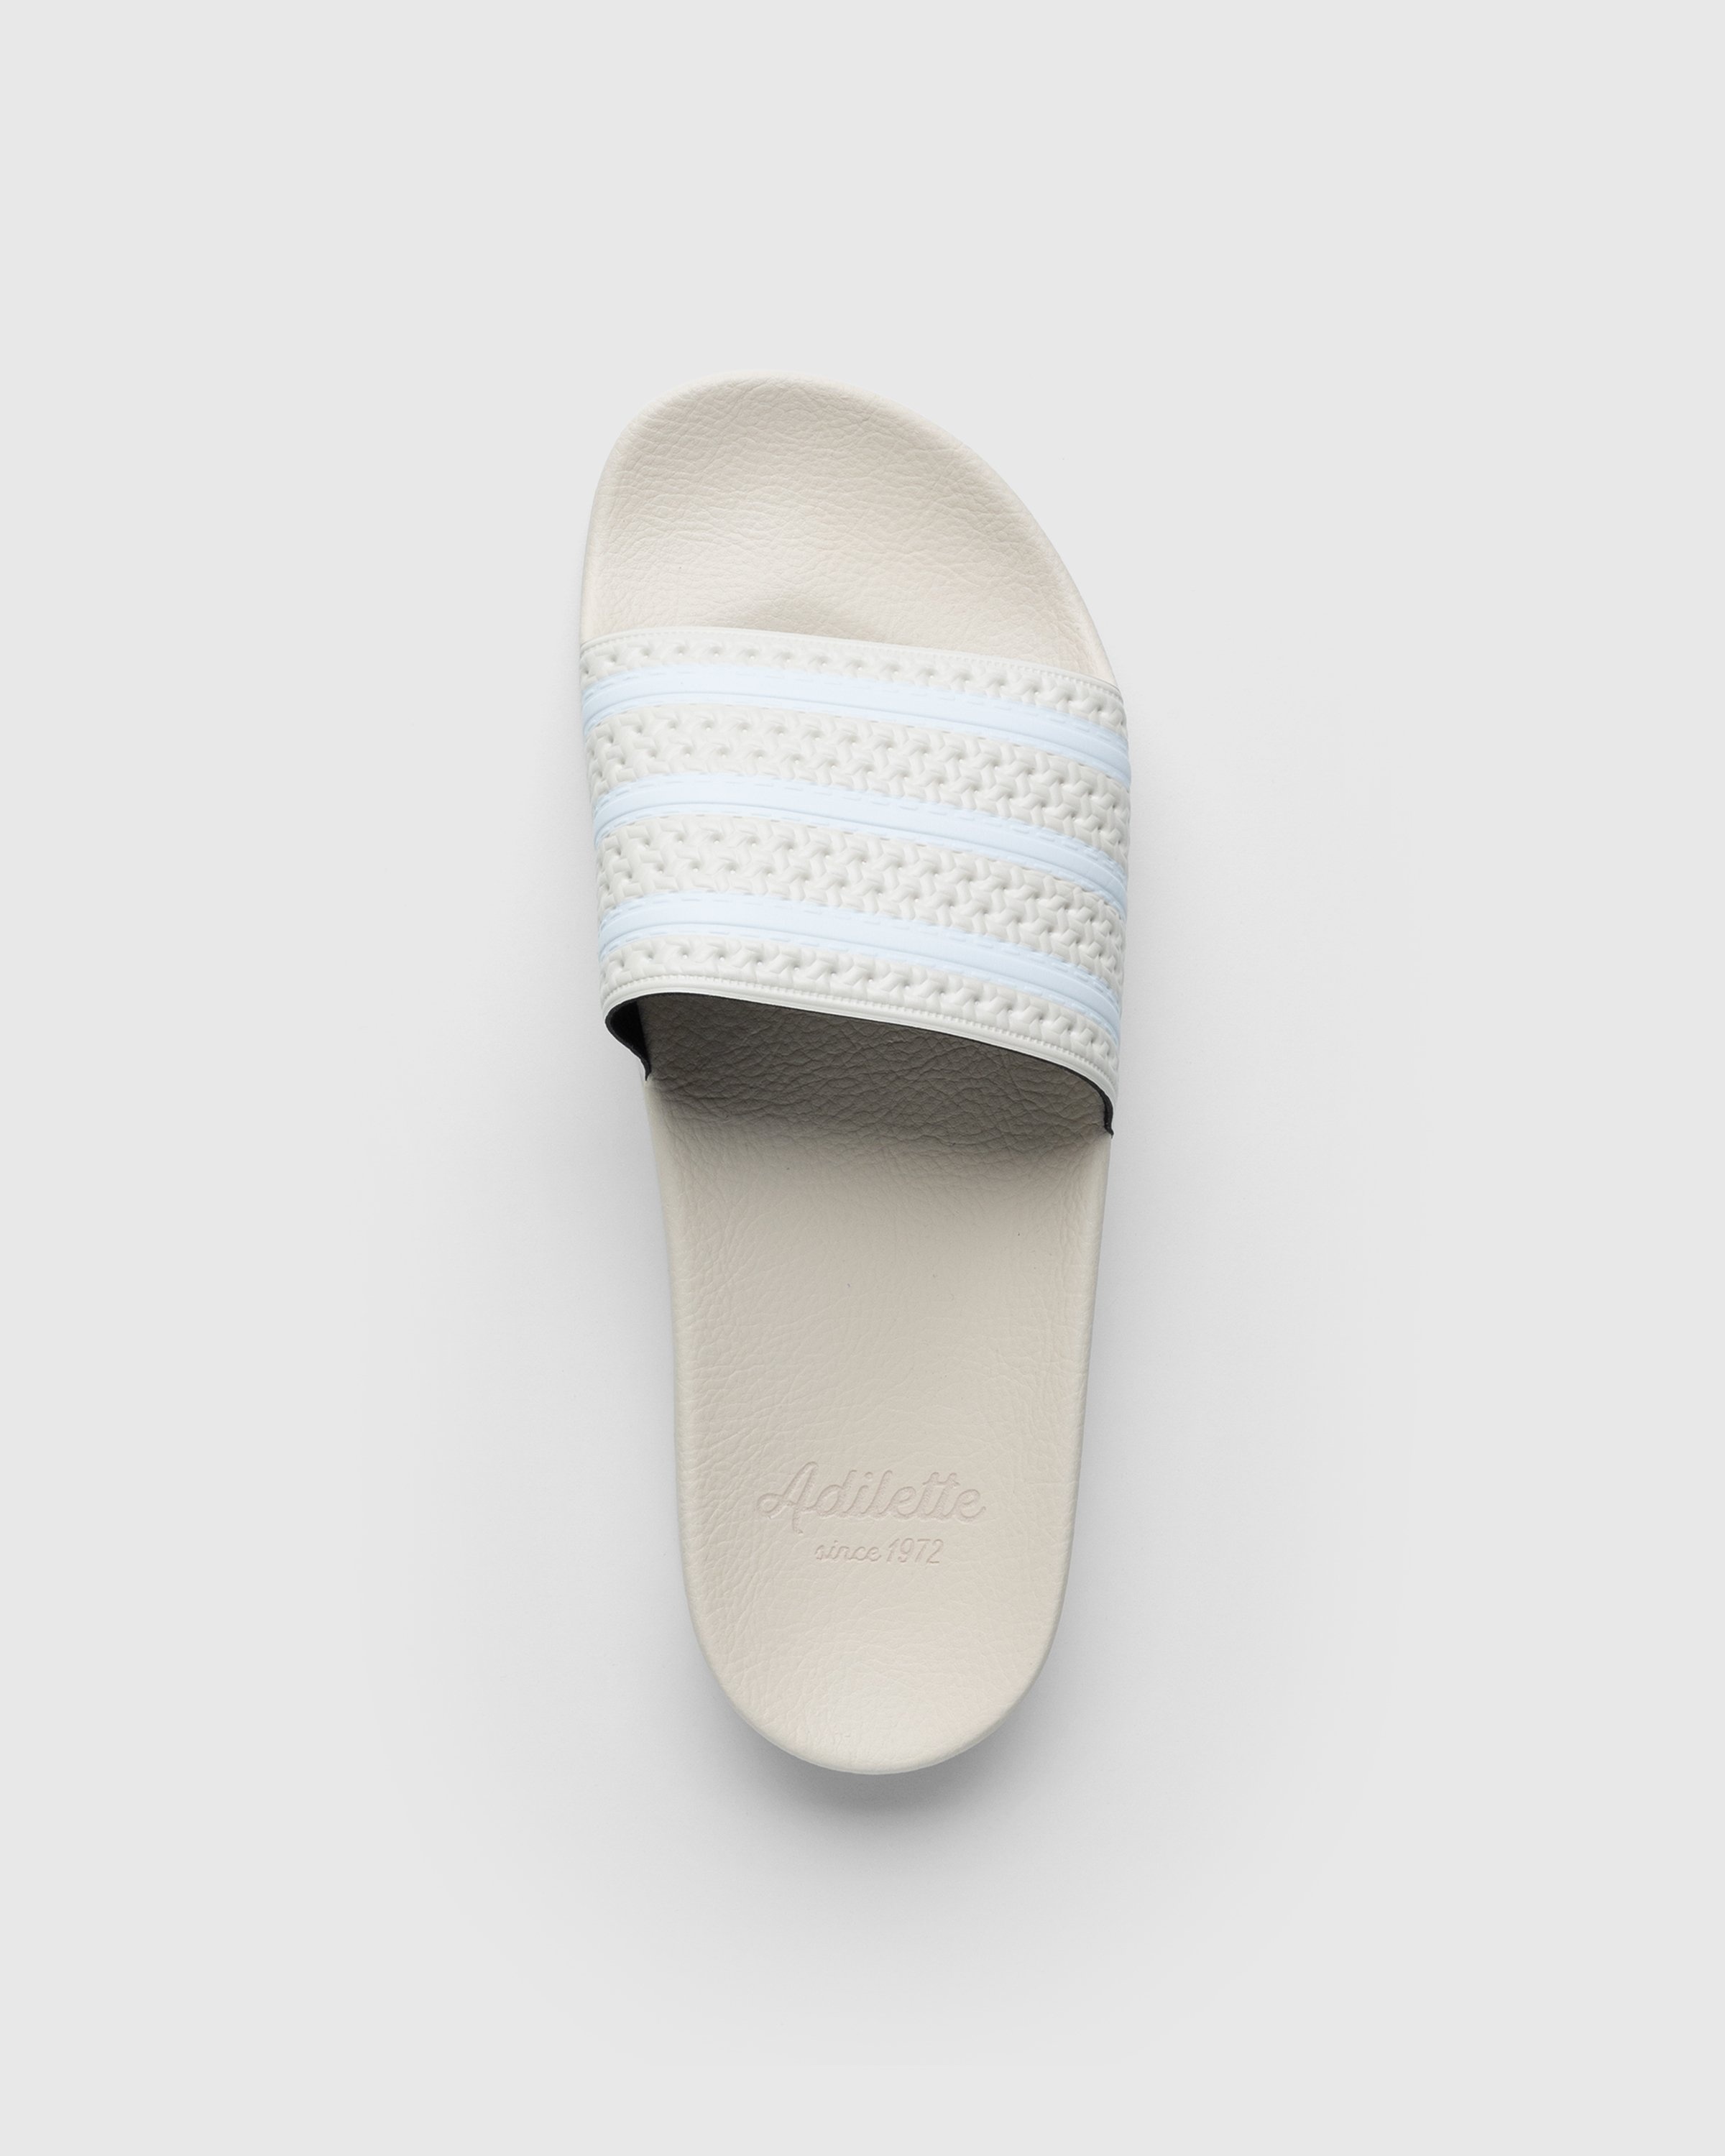 Adidas – Adilette Magic Beige/Cloud White/Off White - Slides - Beige - Image 5